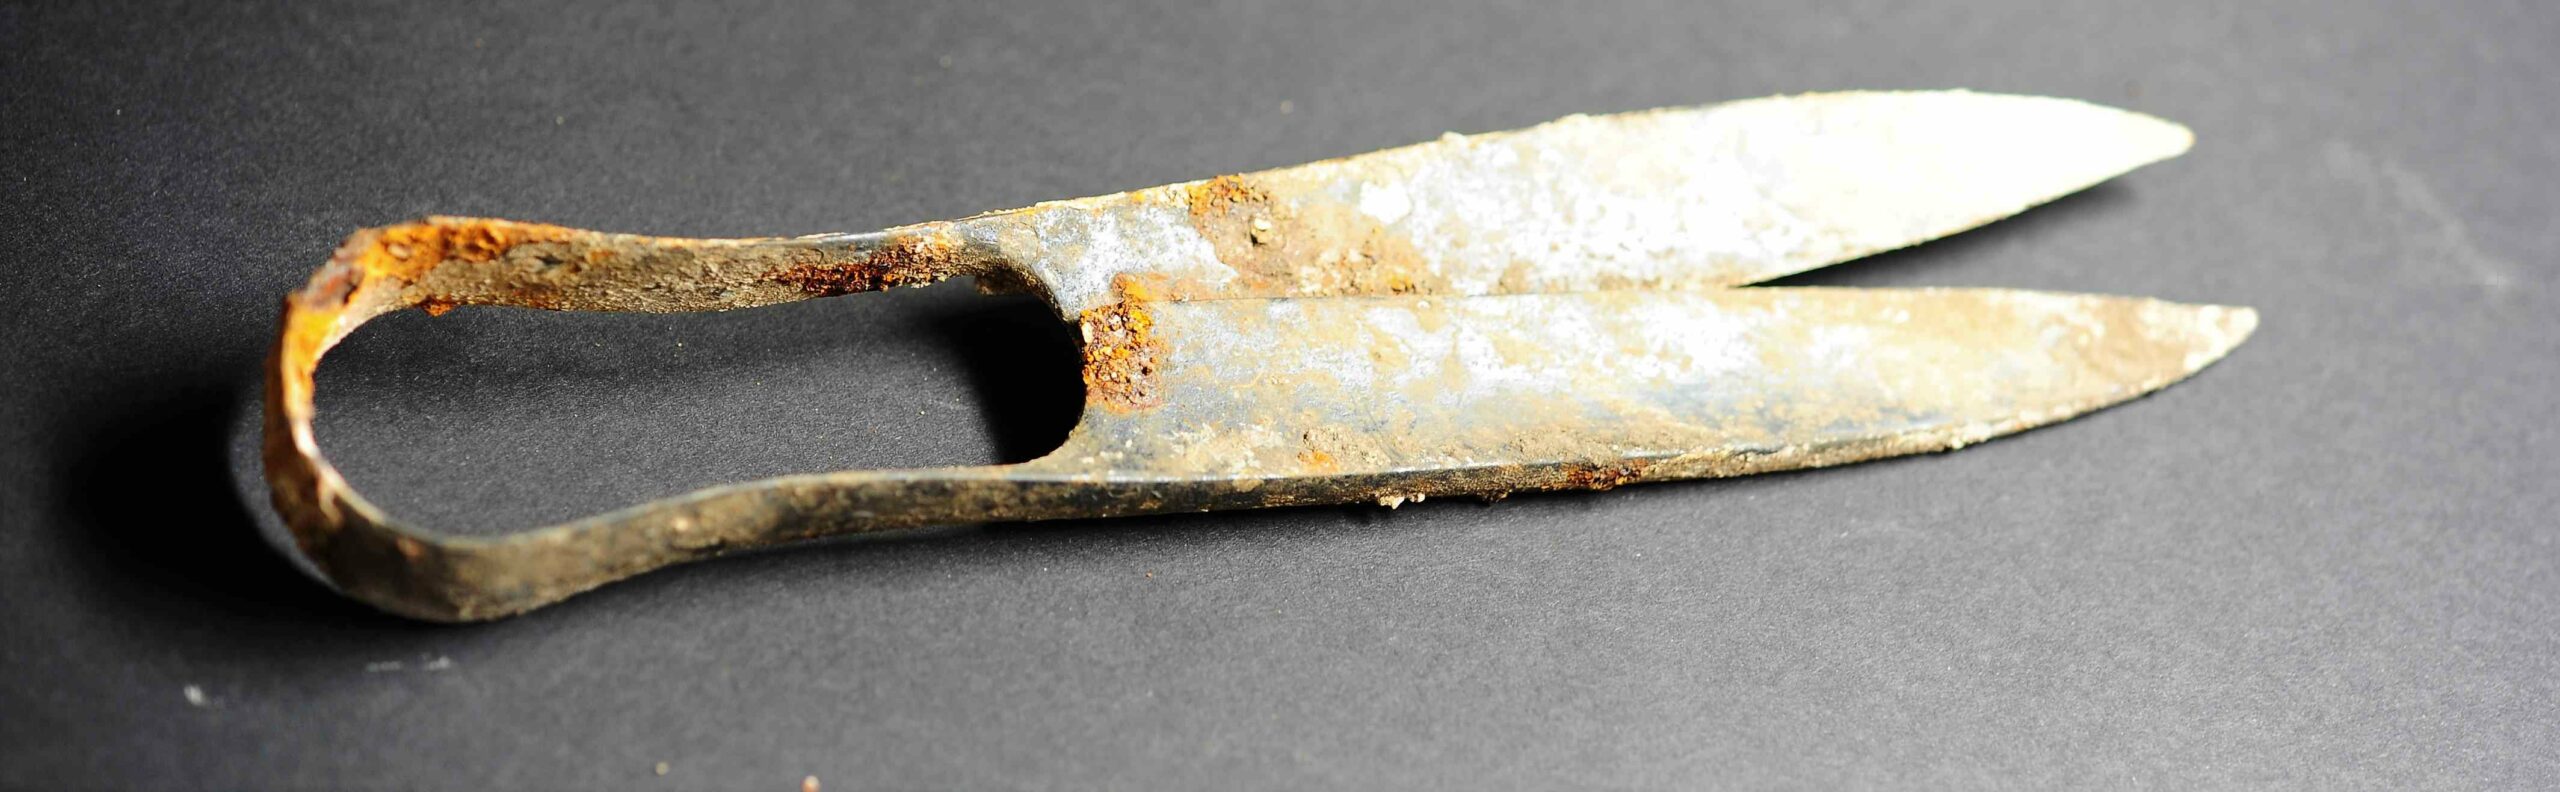 Forbici di 2,300 anni e una spada "ripiegata" scoperte in una tomba a cremazione celtica in Germania 2